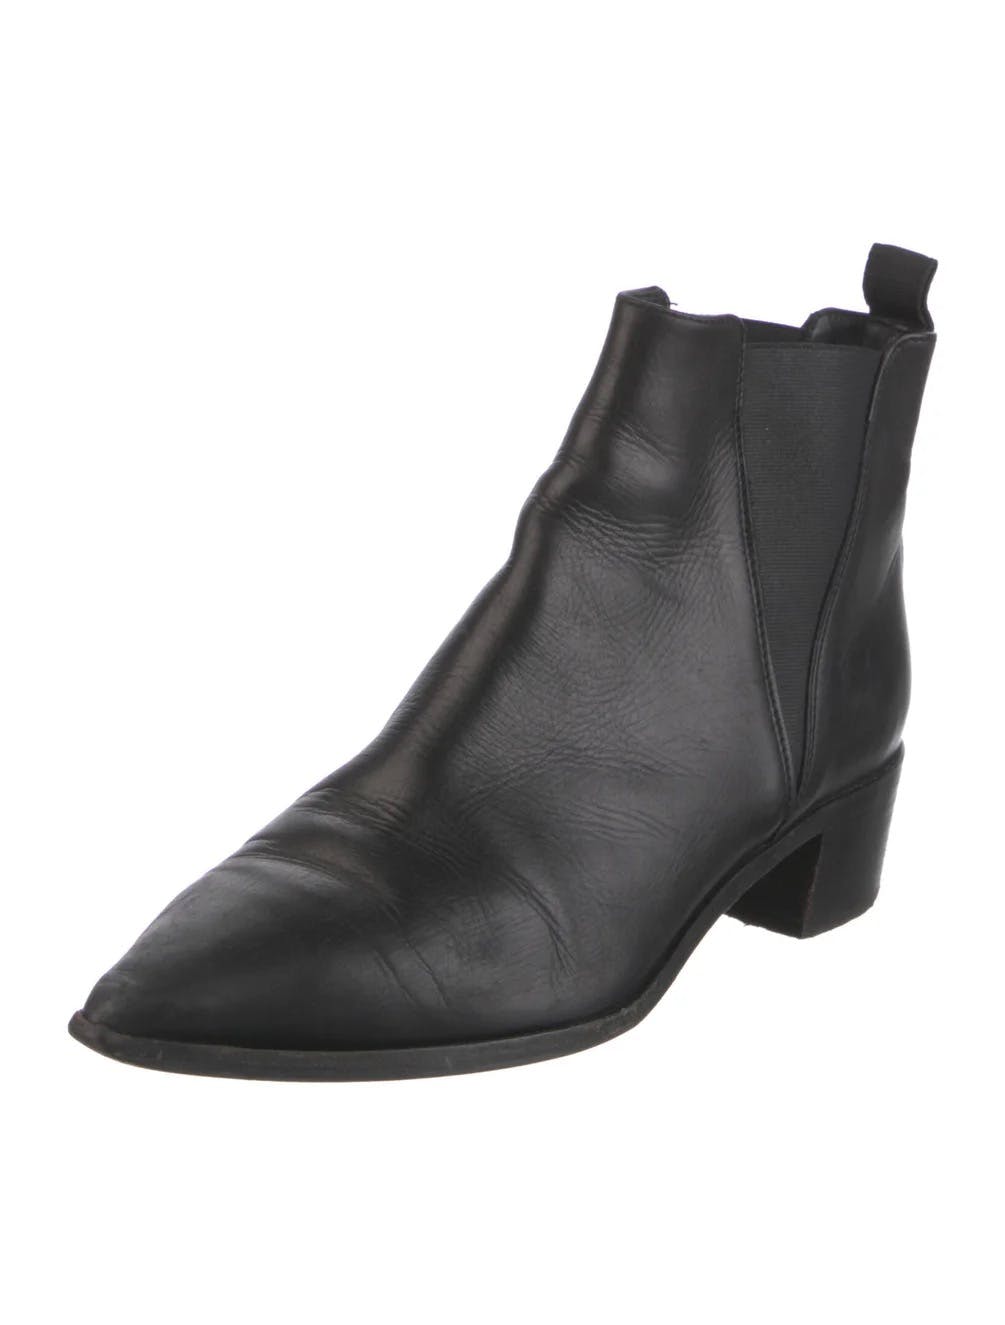 Leather Cuban heel boots - 2